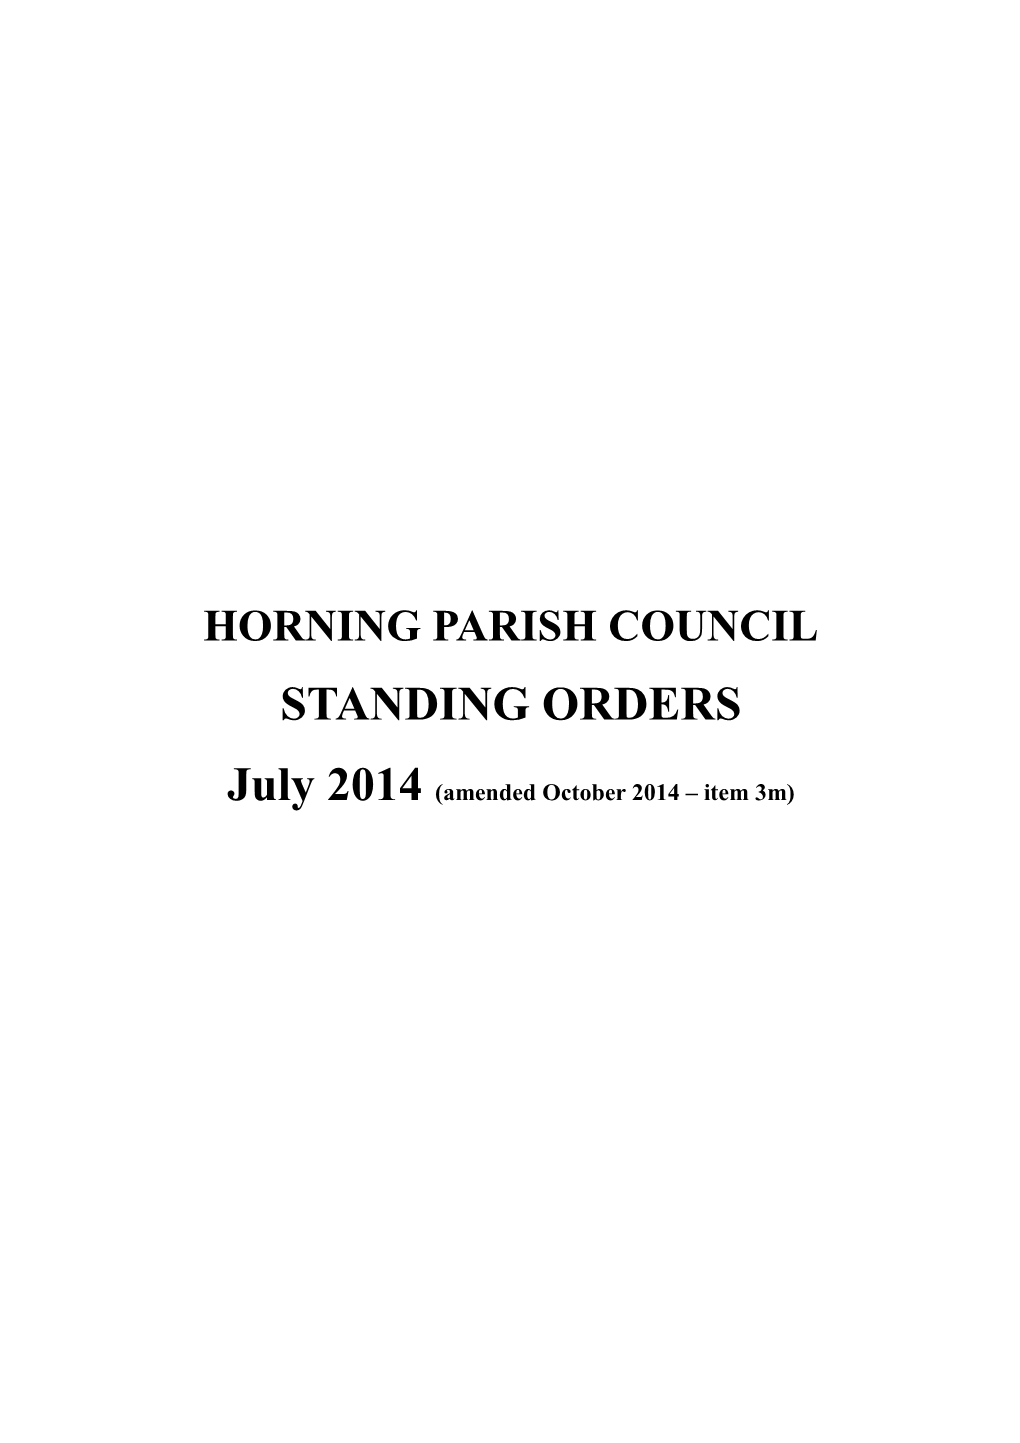 Horning Parish Council